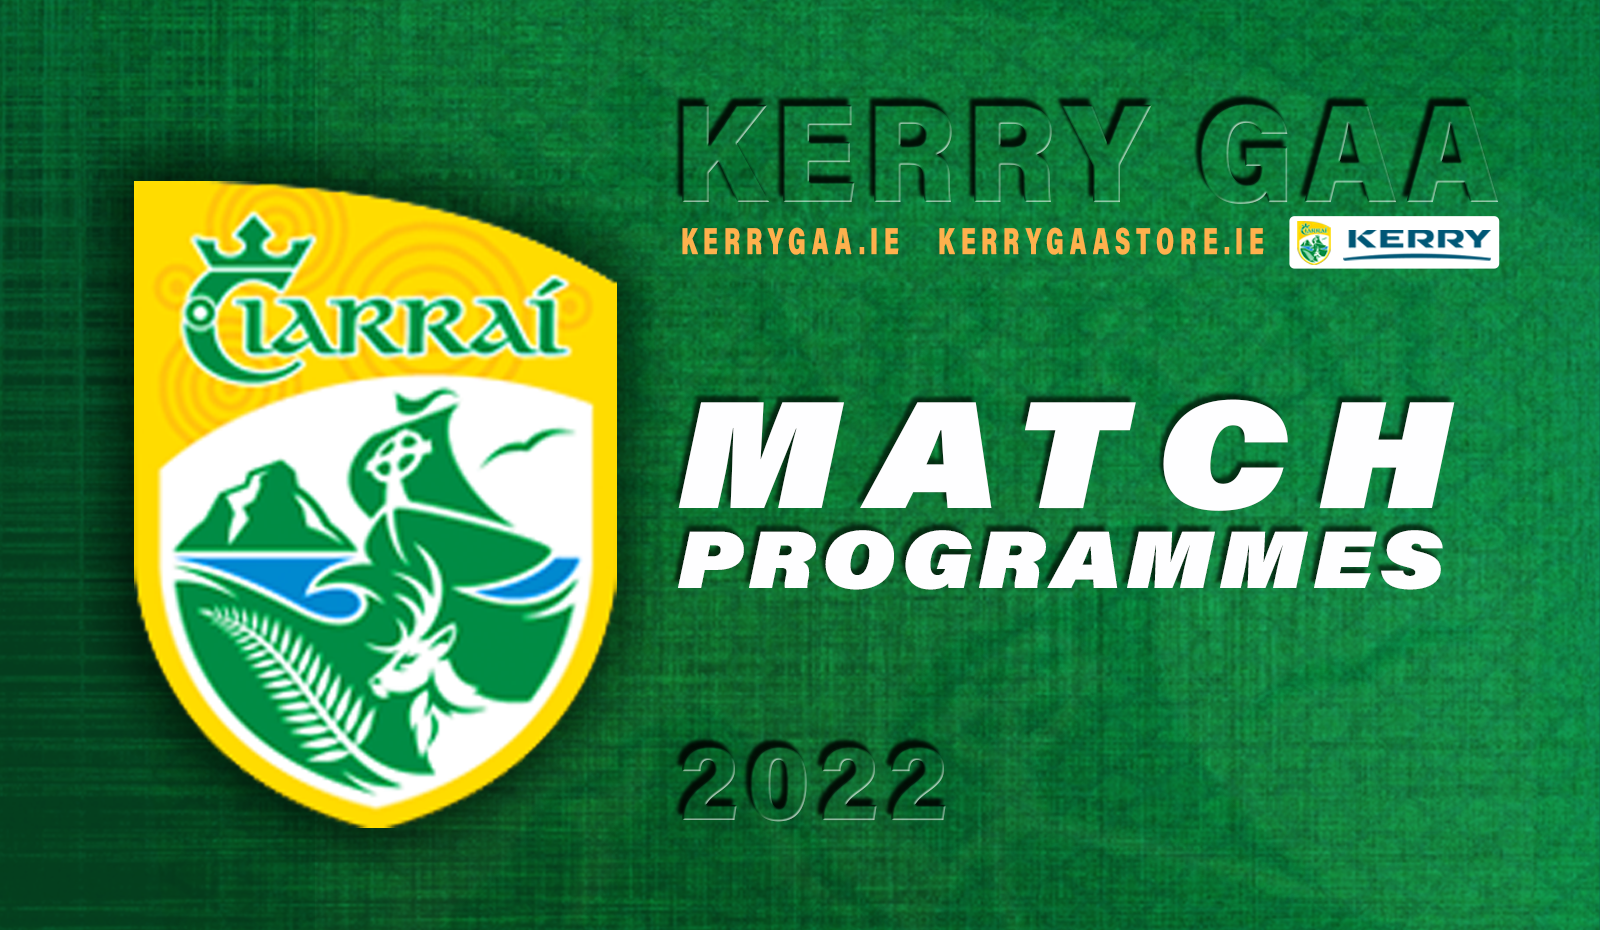 Kerry Petroleum Club Championship – Match Programmes for Sunday